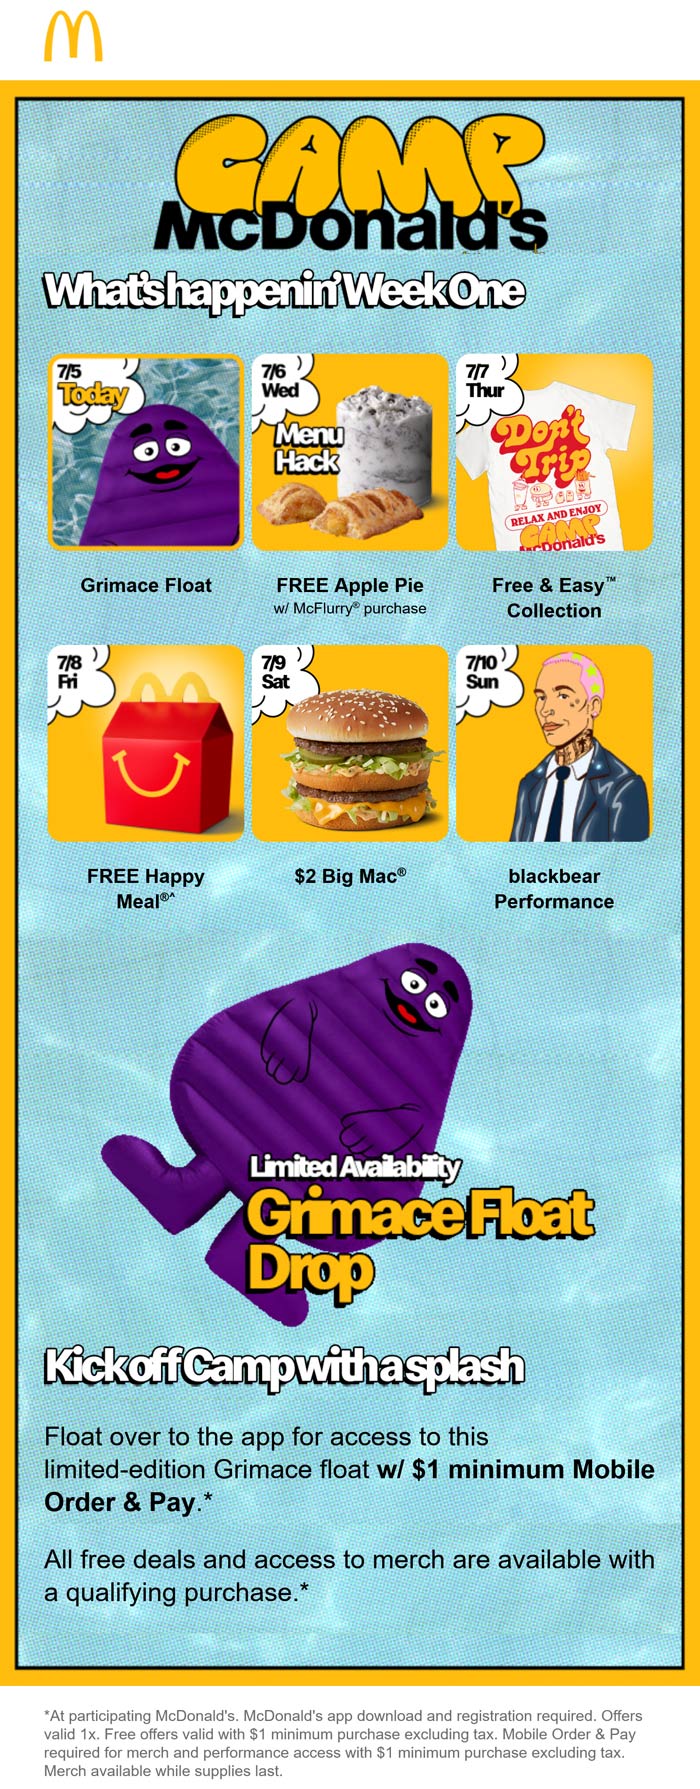 McDonalds restaurants Coupon  Free happy meal & more this week at McDonalds restaurants #mcdonalds 